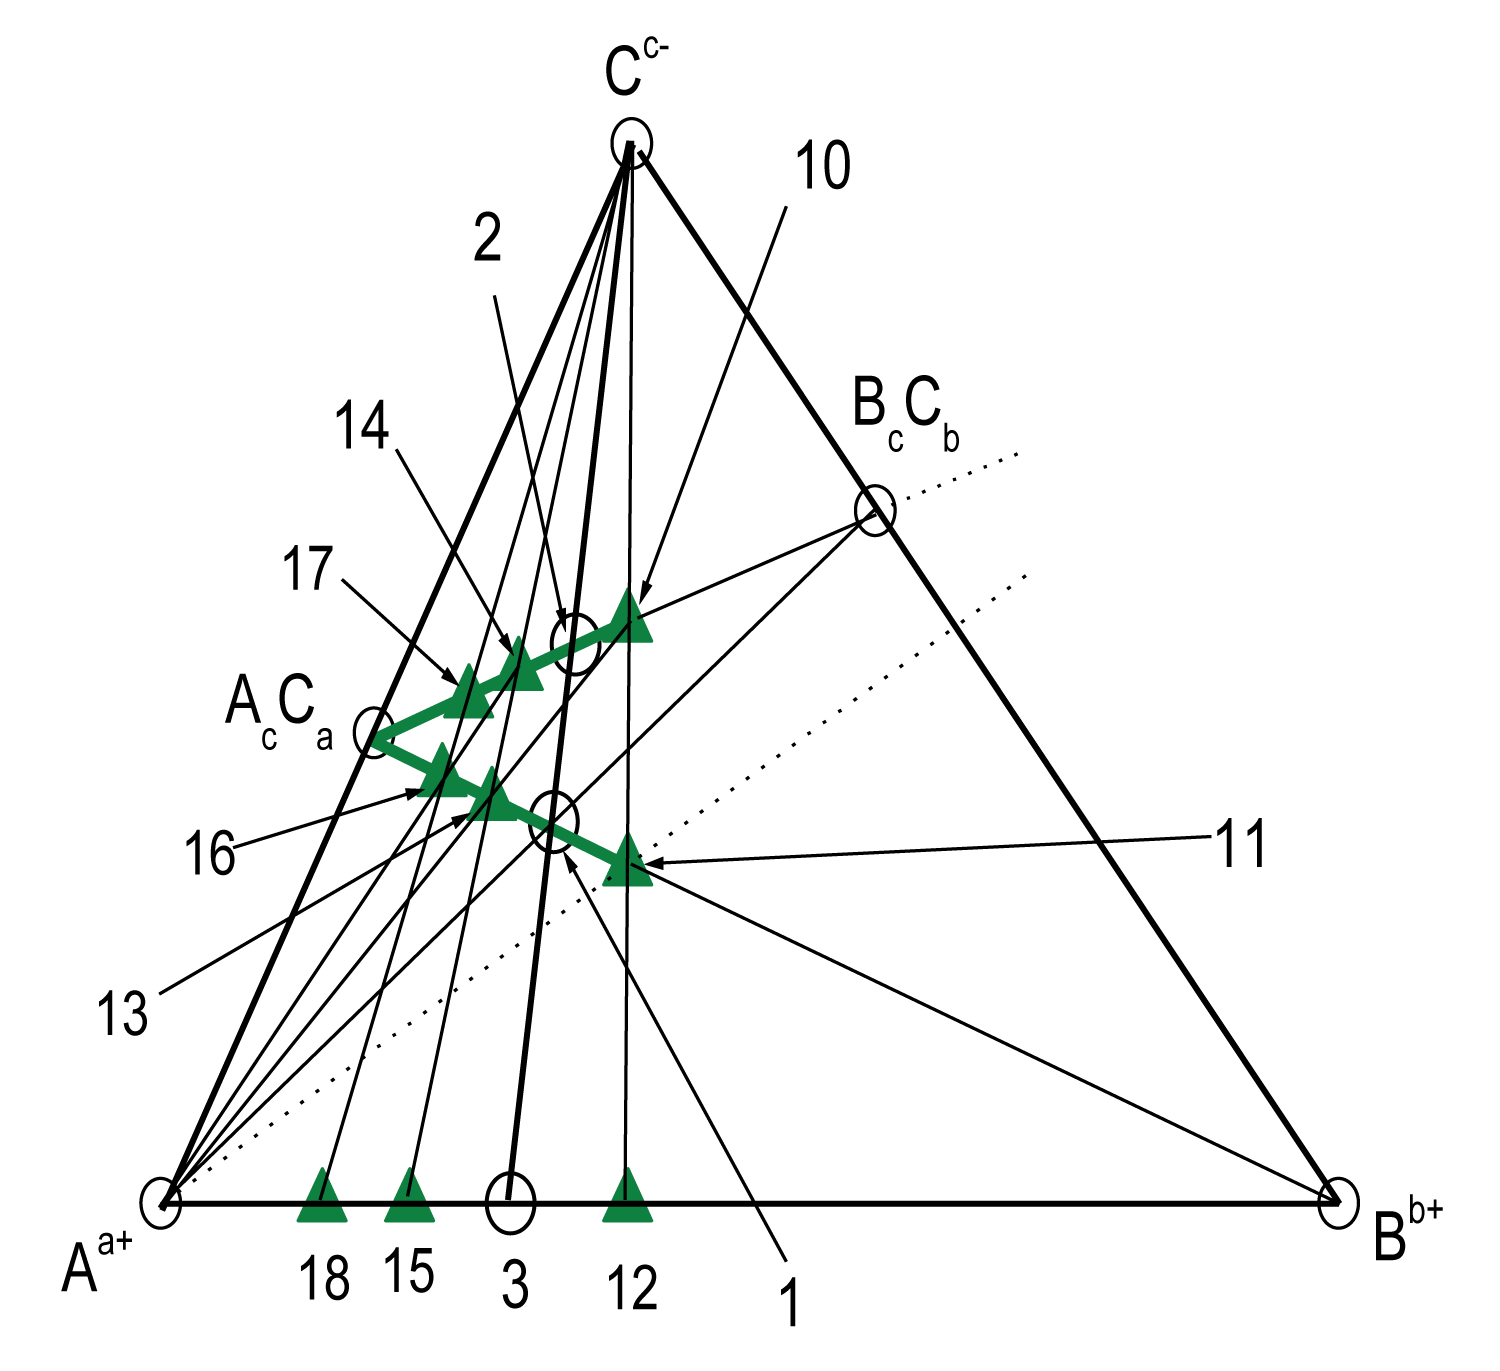 System (Aa+ – Bb+ – Cc–): p-group HS (AcCa direction). (p. 10 = TCCn(bas) = 1 = AtbcBracC(t + r)ab), (p. 11 = TChCln(bas) = 1 = [AtbcBracCt ab]rabc+), (p. 12 = TwChCln(bas) = 1 = [AtbcBrac](t + r)abc+), (p. 13 = TChCln = 2 = [A(t + r)bcBracC(t + r)ab]rabc+), (p. 14 = TCCn = 2 = A(t + r)bcBracC(t + 2r)ab, (p. 15 = TwChCln = 2 = [A(t + r)bcBrac](t + 2r)abc+), (p. 16 = TChCln = 3 = A(t + 2r)bcBracC(t +2 r)ab]rabc+), (p. 17 = TCCn = 3 = A(t + 2r)bcBracC(t + 3r)ab, (p. 18 = TwChCln = 3 = [A(t + 2r)bcBrac](t + 3r)abc+).